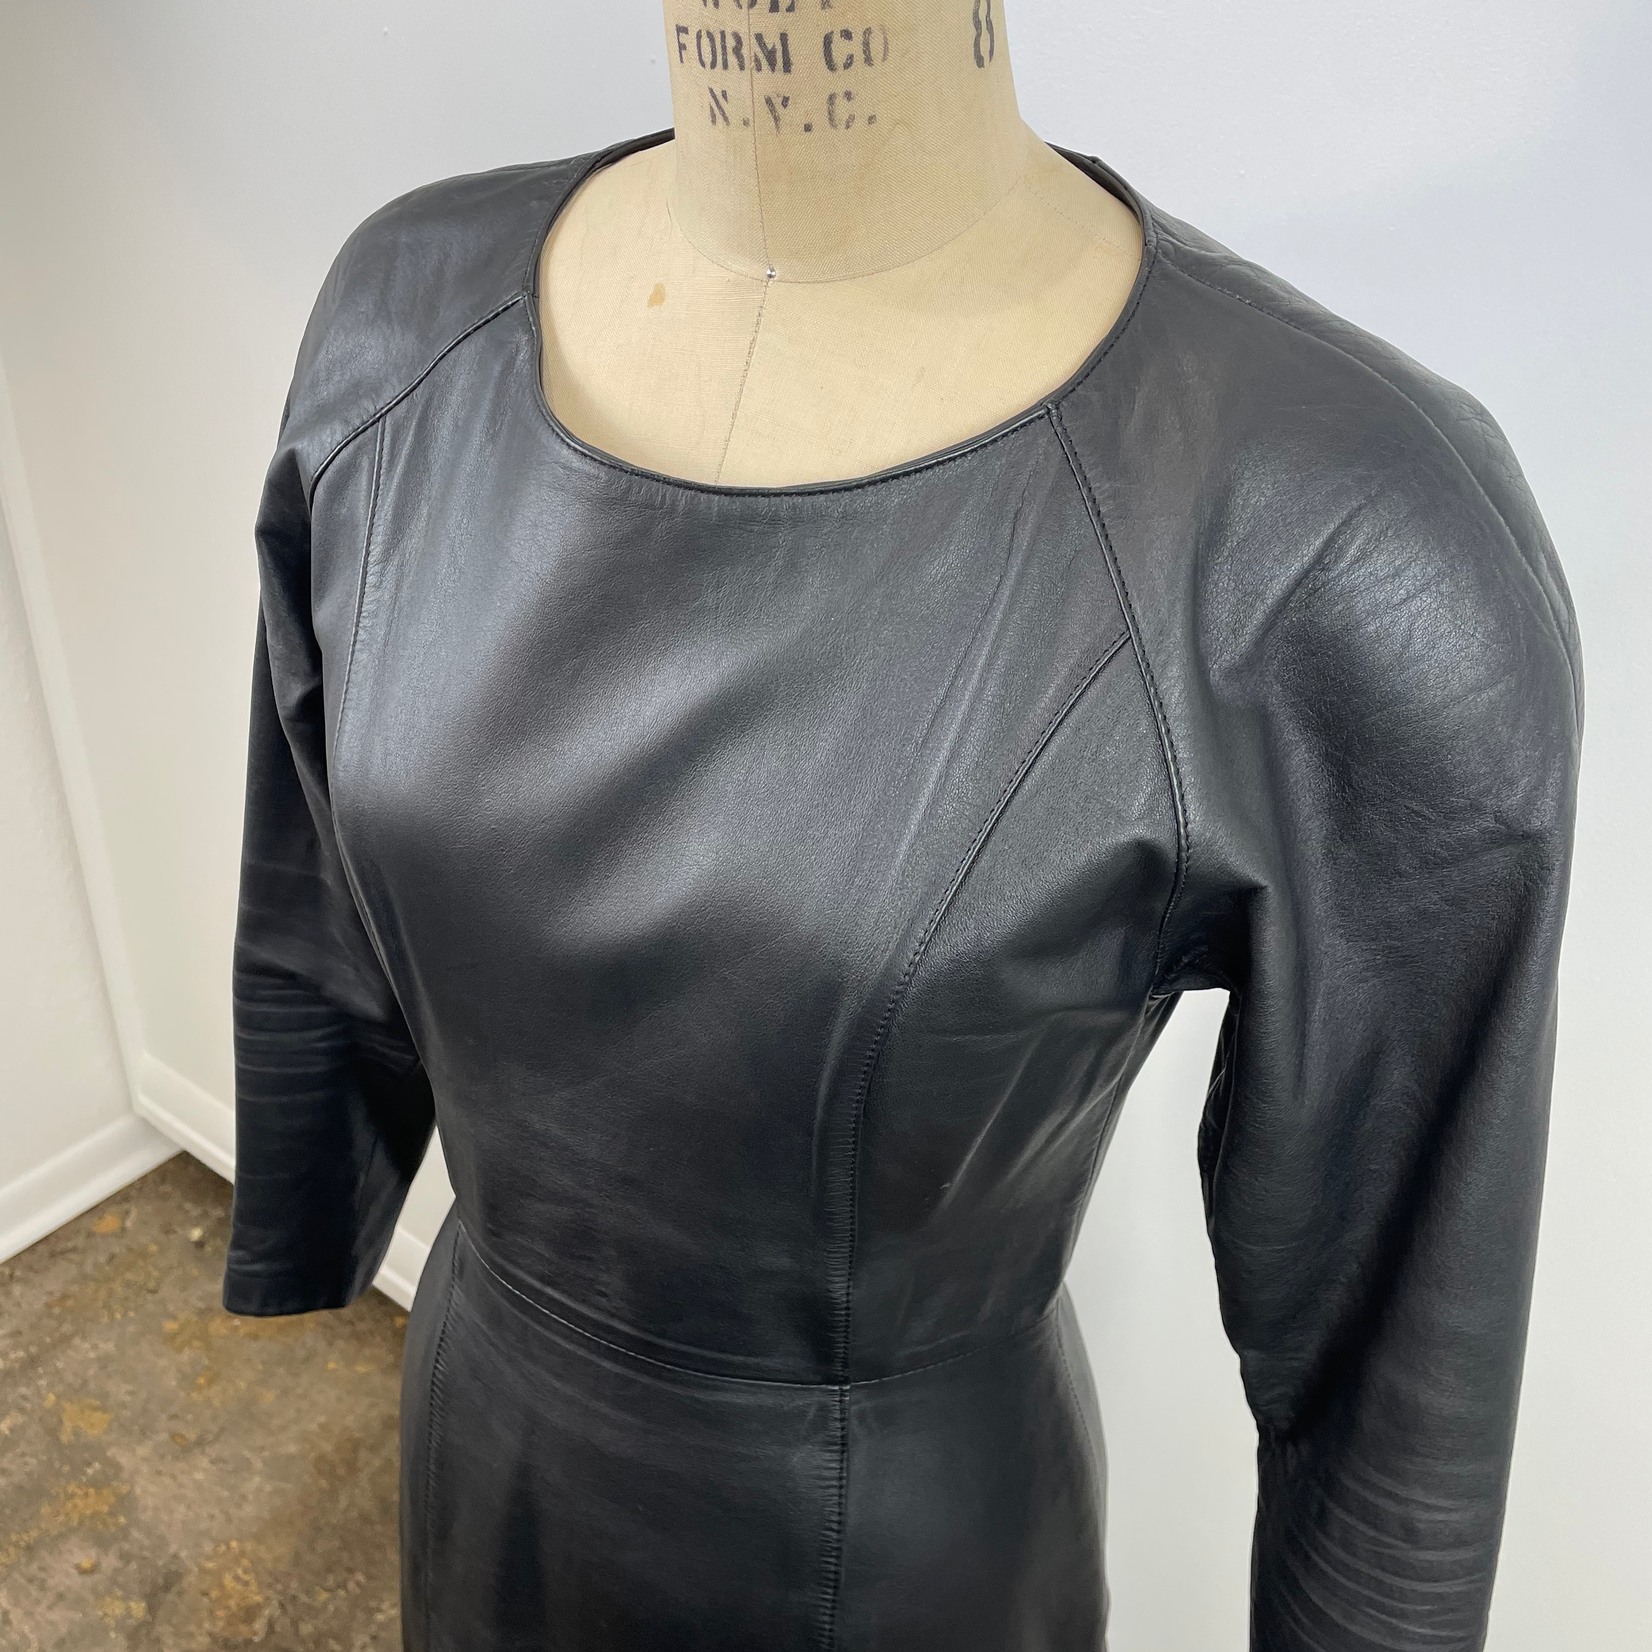 Midi Leather Dress